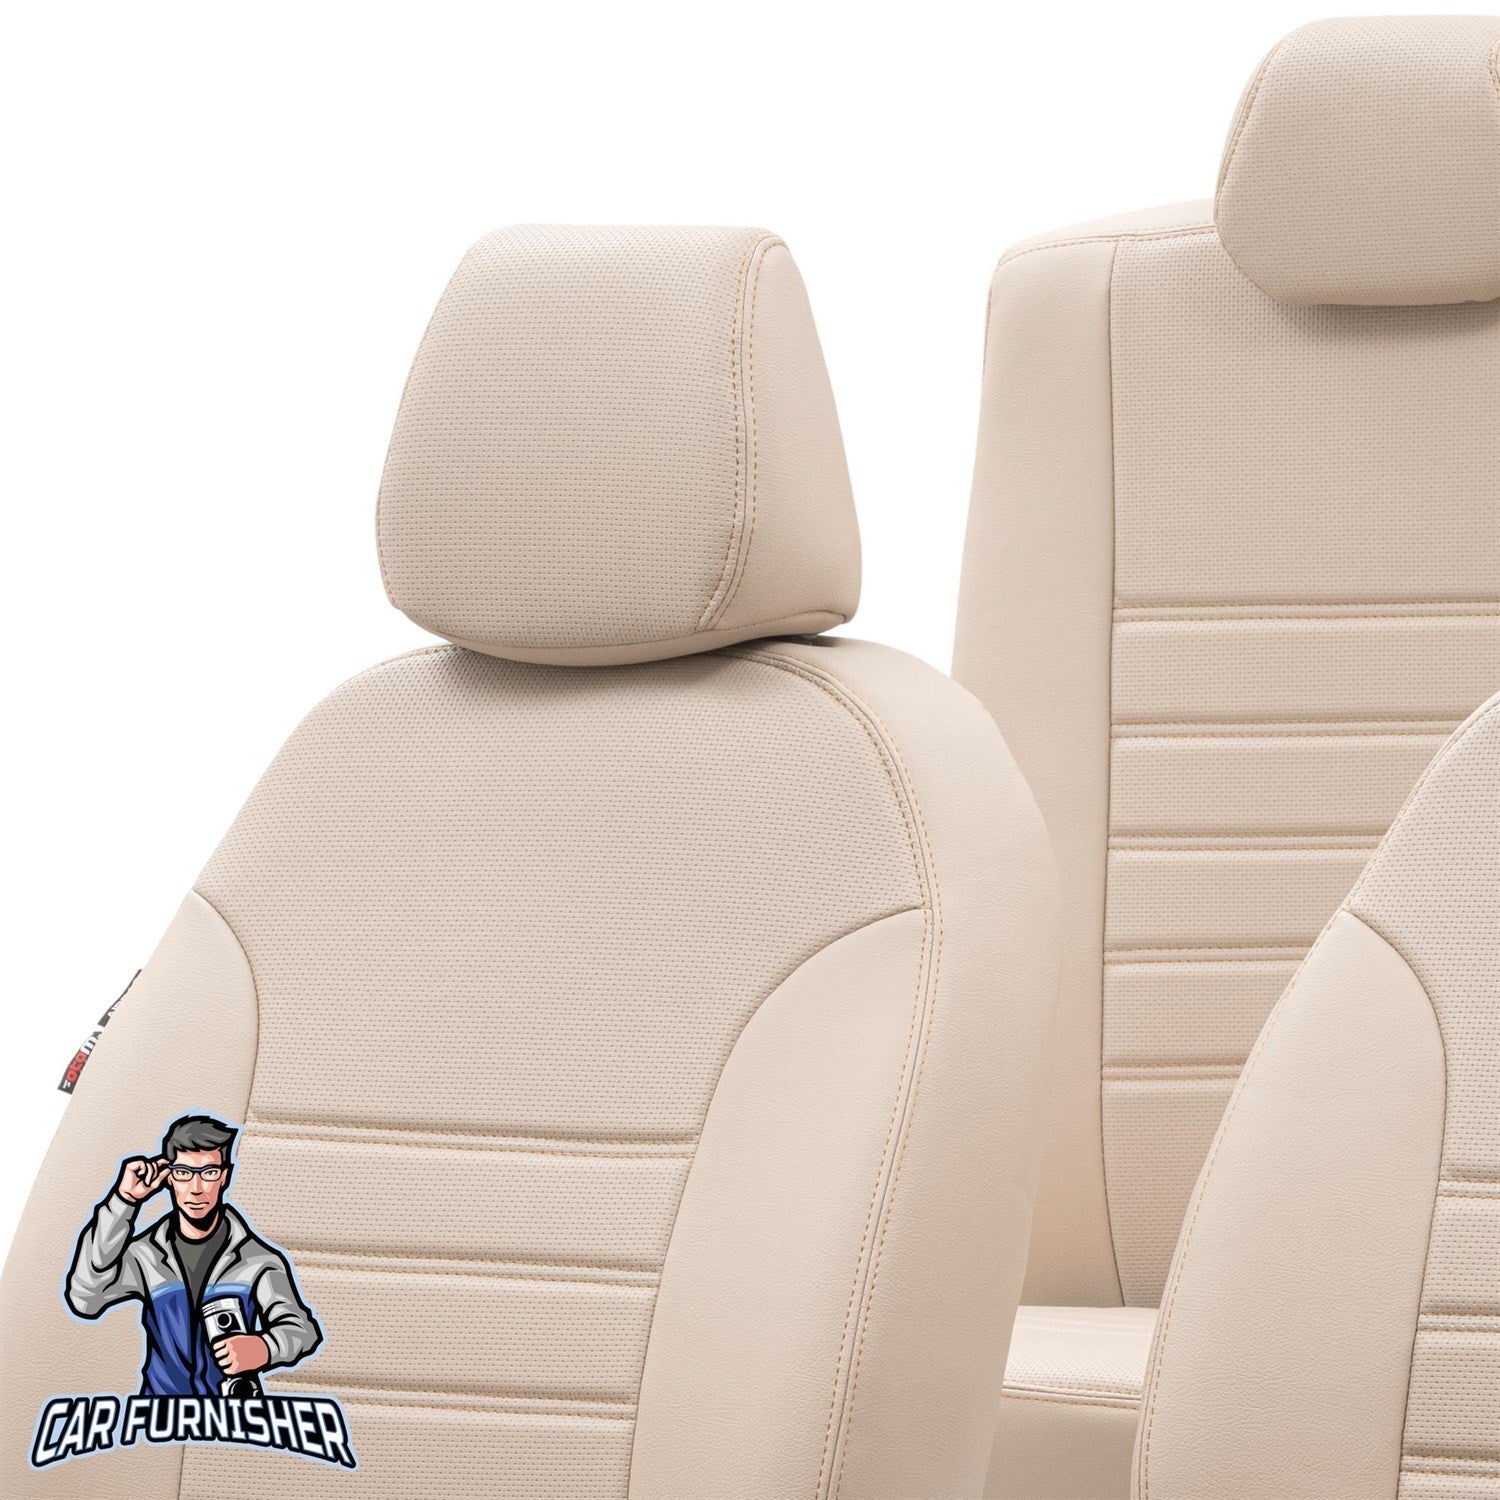 Peugeot 107 Car Seat Covers 2006-2013 New York Design Beige Full Set (5 Seats + Handrest) Leather & Fabric